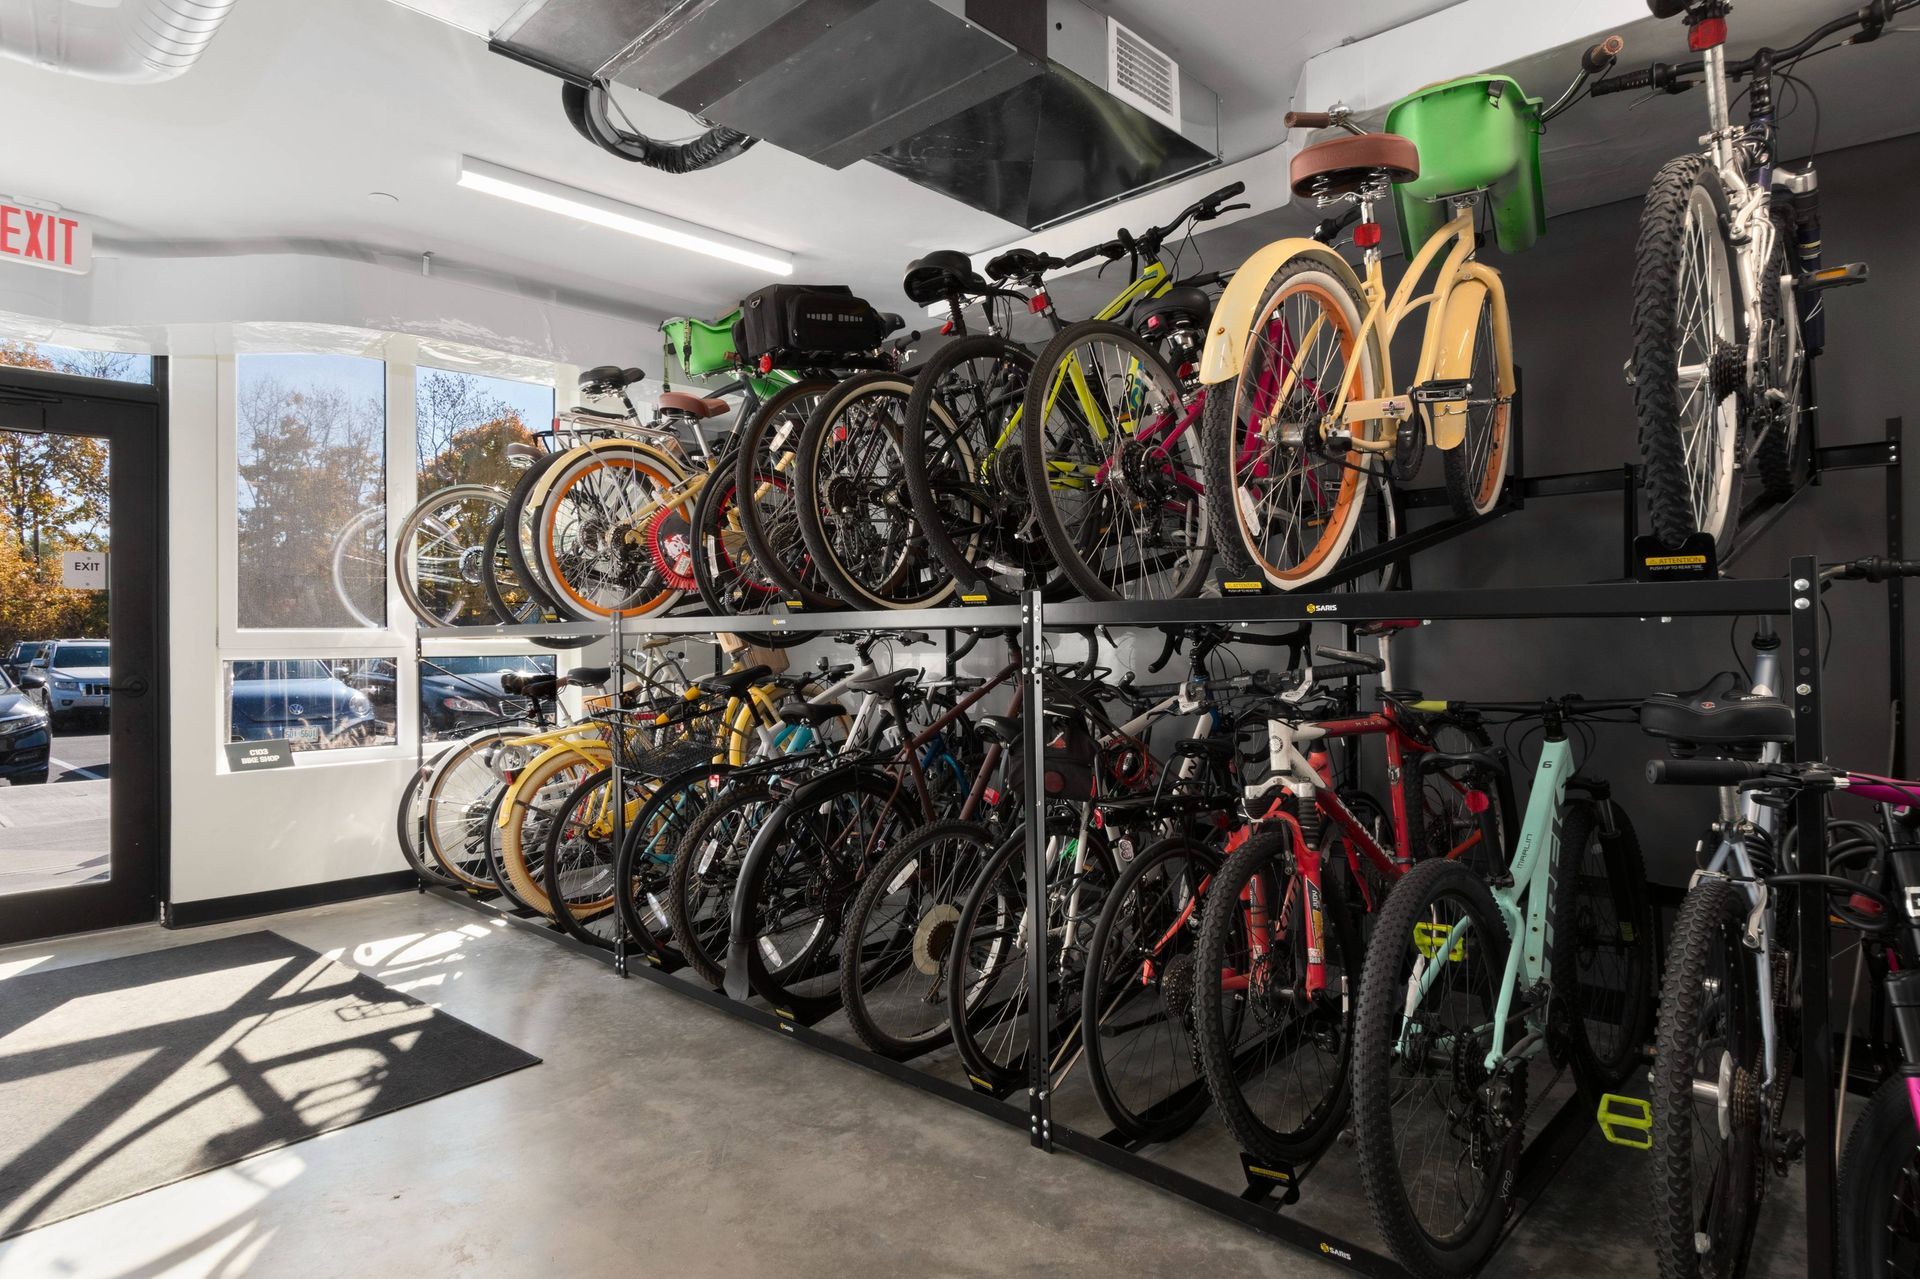 West End Yards bike storage room.